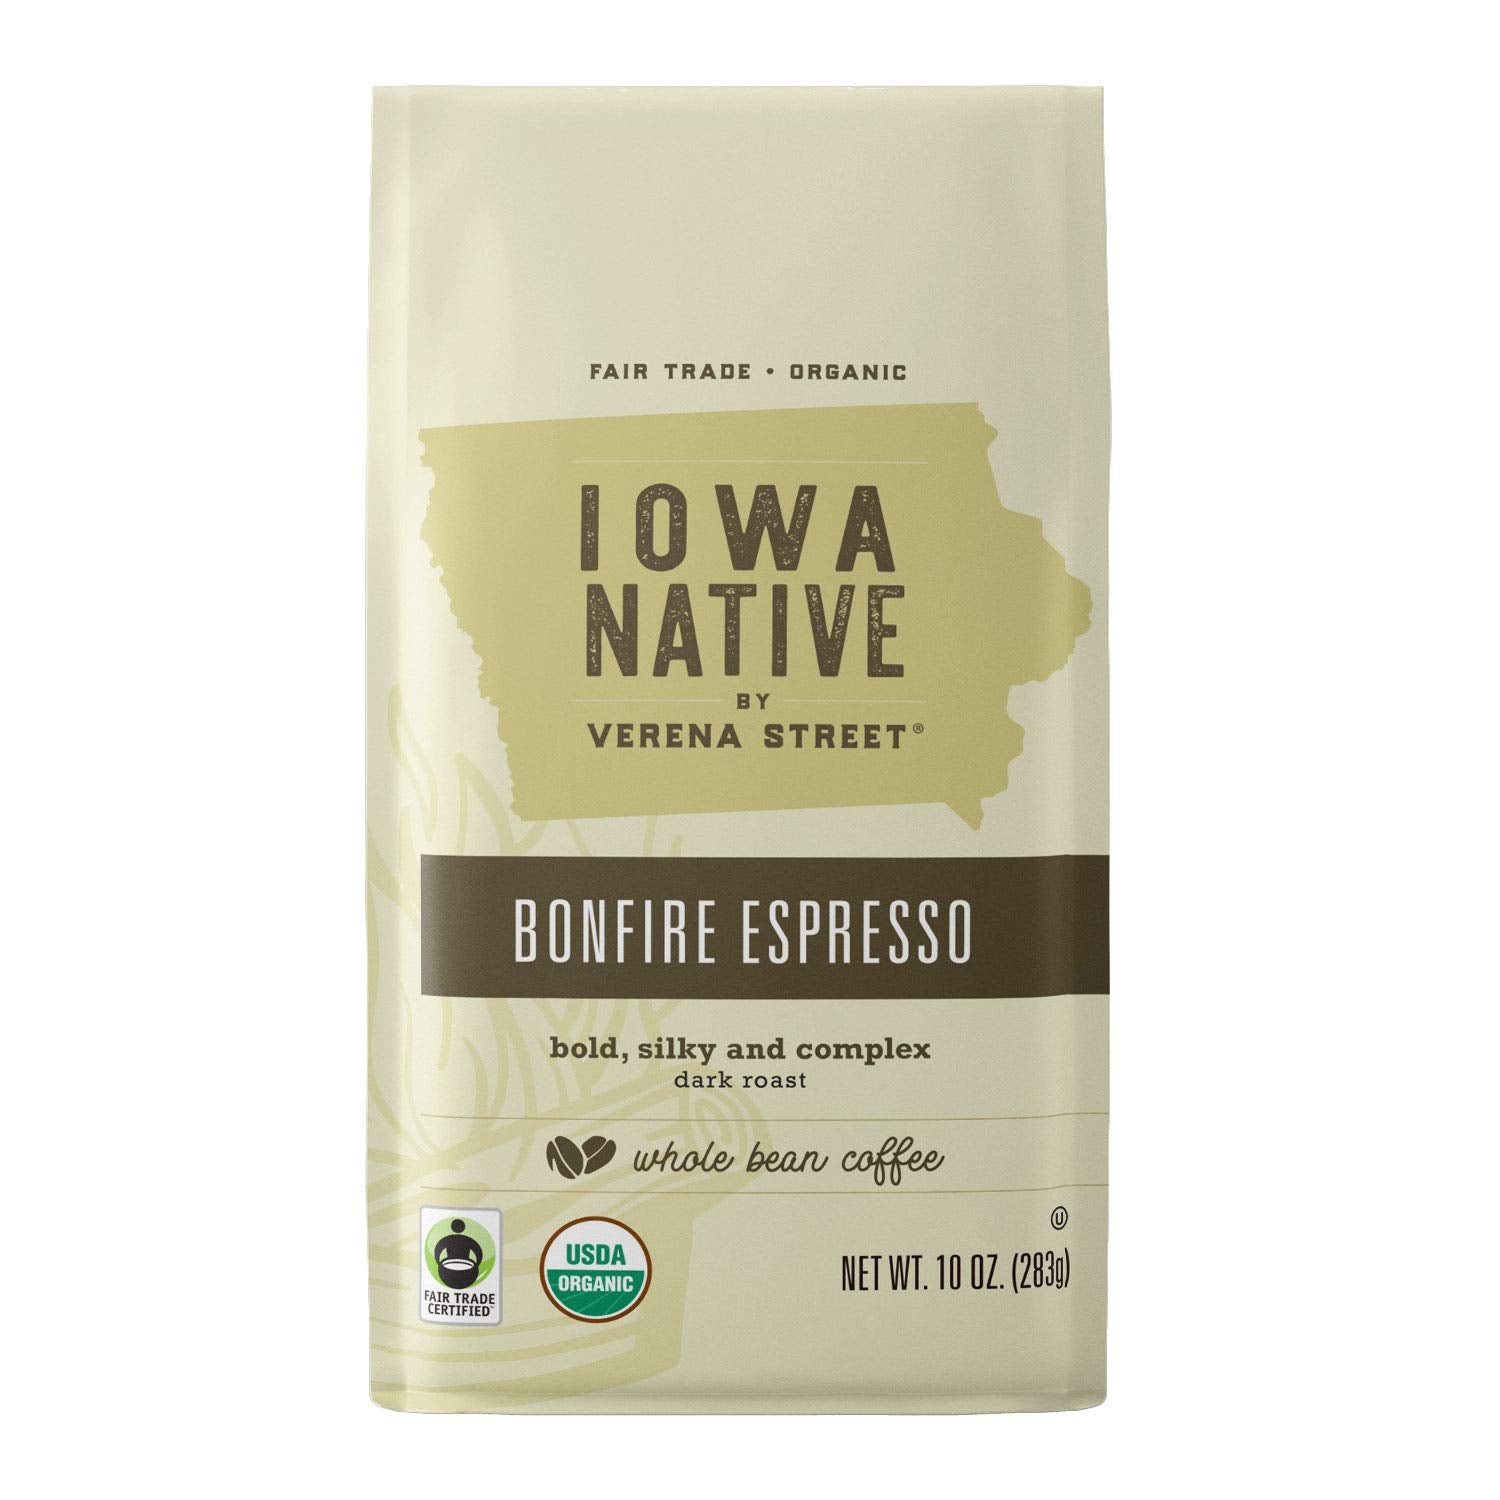 Iowa Native Fair Trade Organic Espresso Beans, Bonfire Espresso Whole Bean Dark Roast